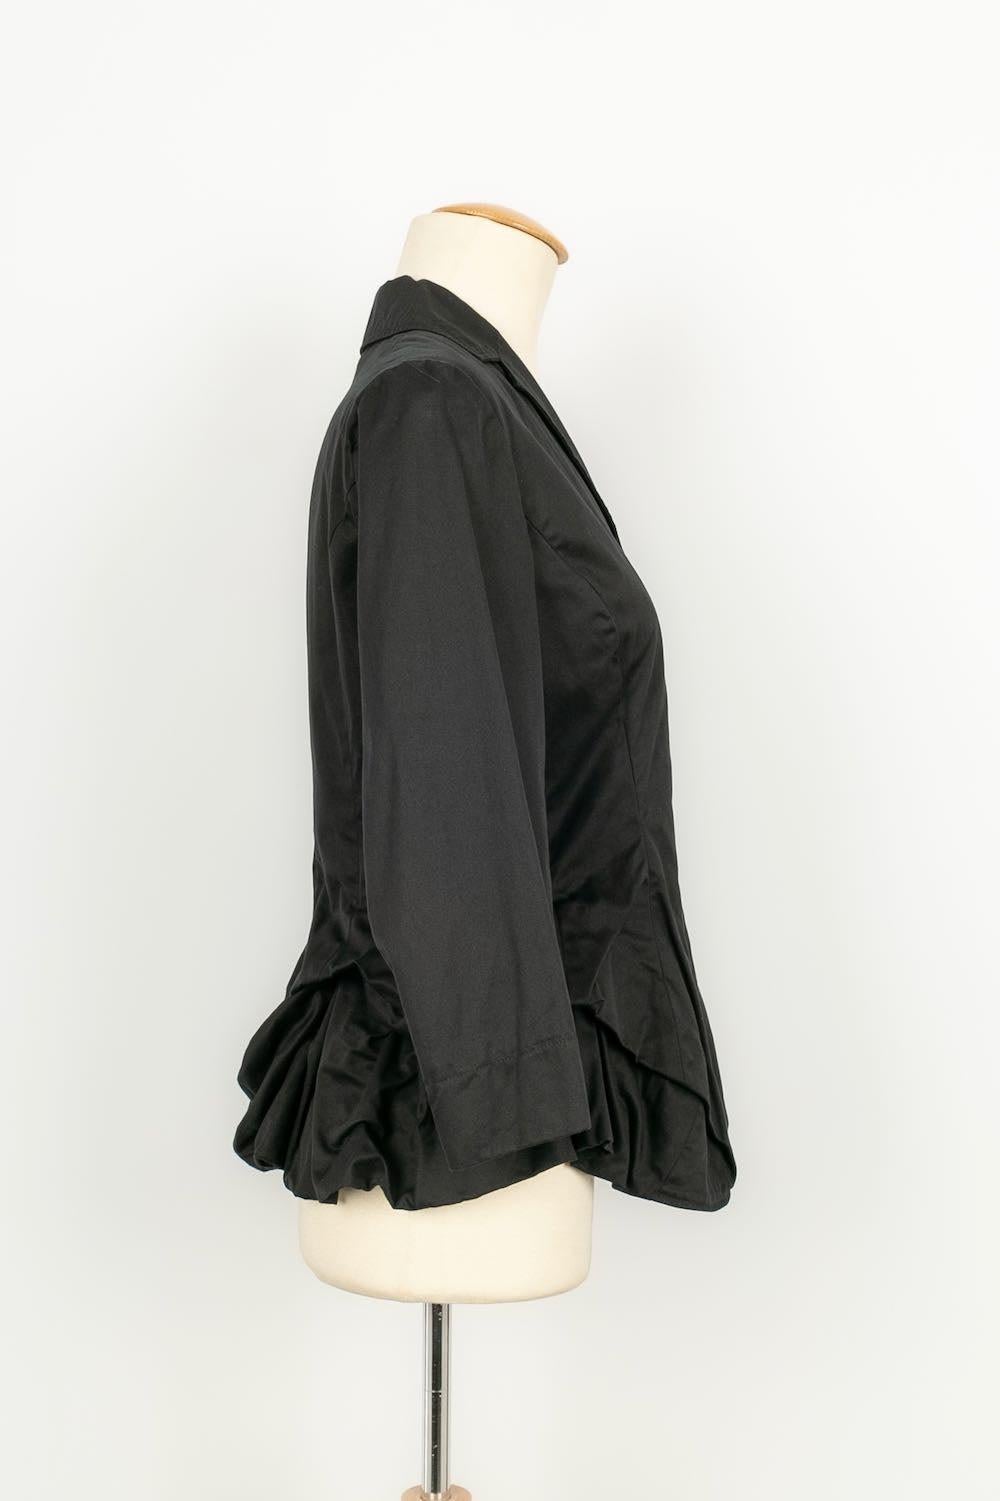 Women's Peachoo + Krejberg Black Top in Black Cotton Shirt For Sale